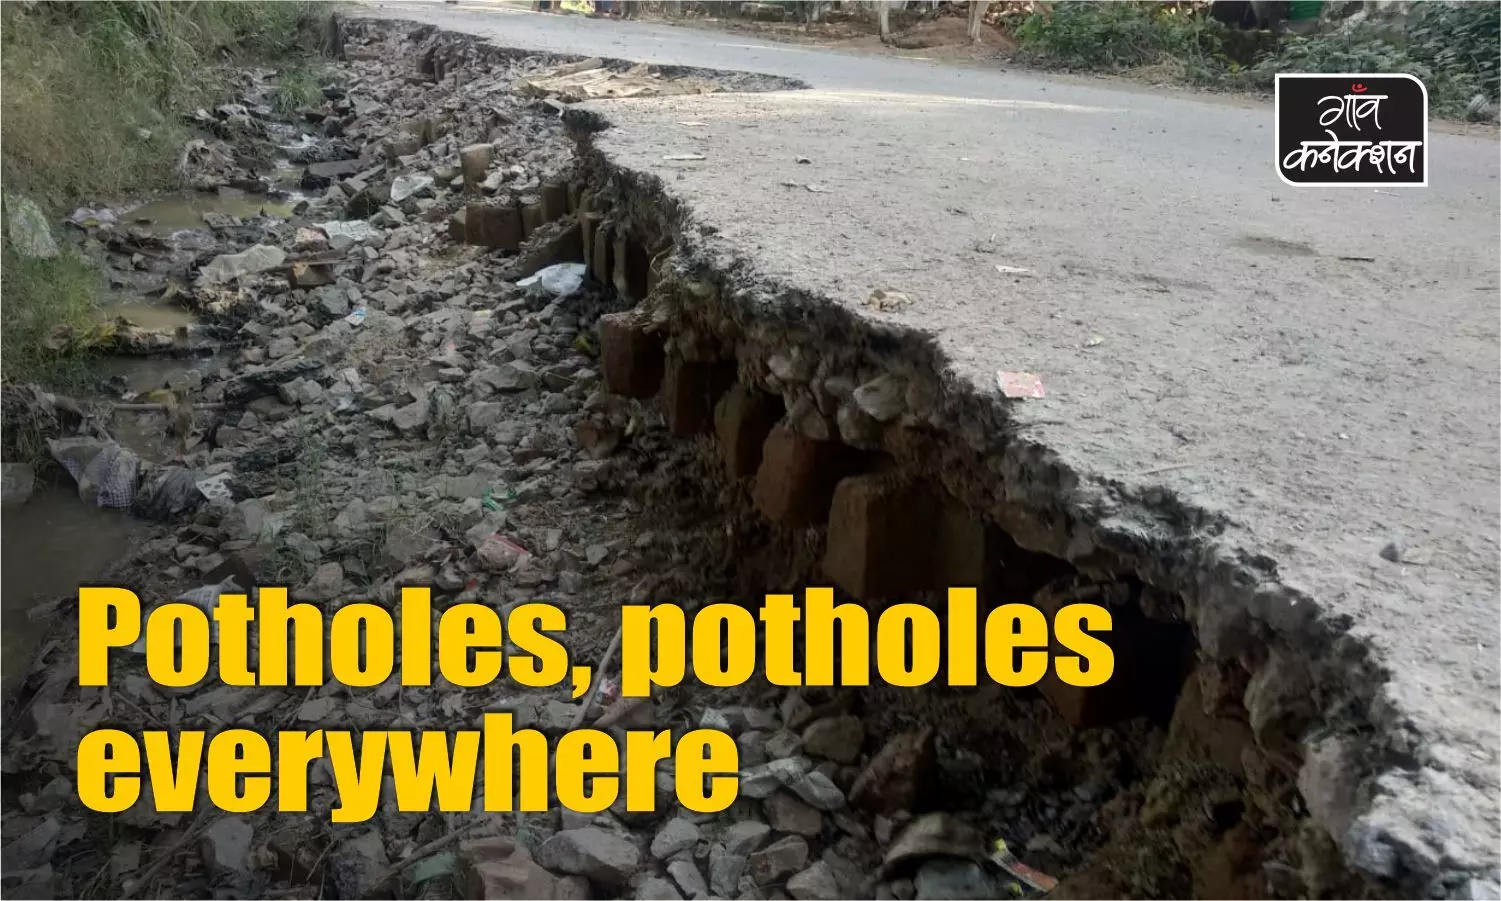 Yogi Adityanath wants pothole-free roads in Uttar Pradesh by Nov 15